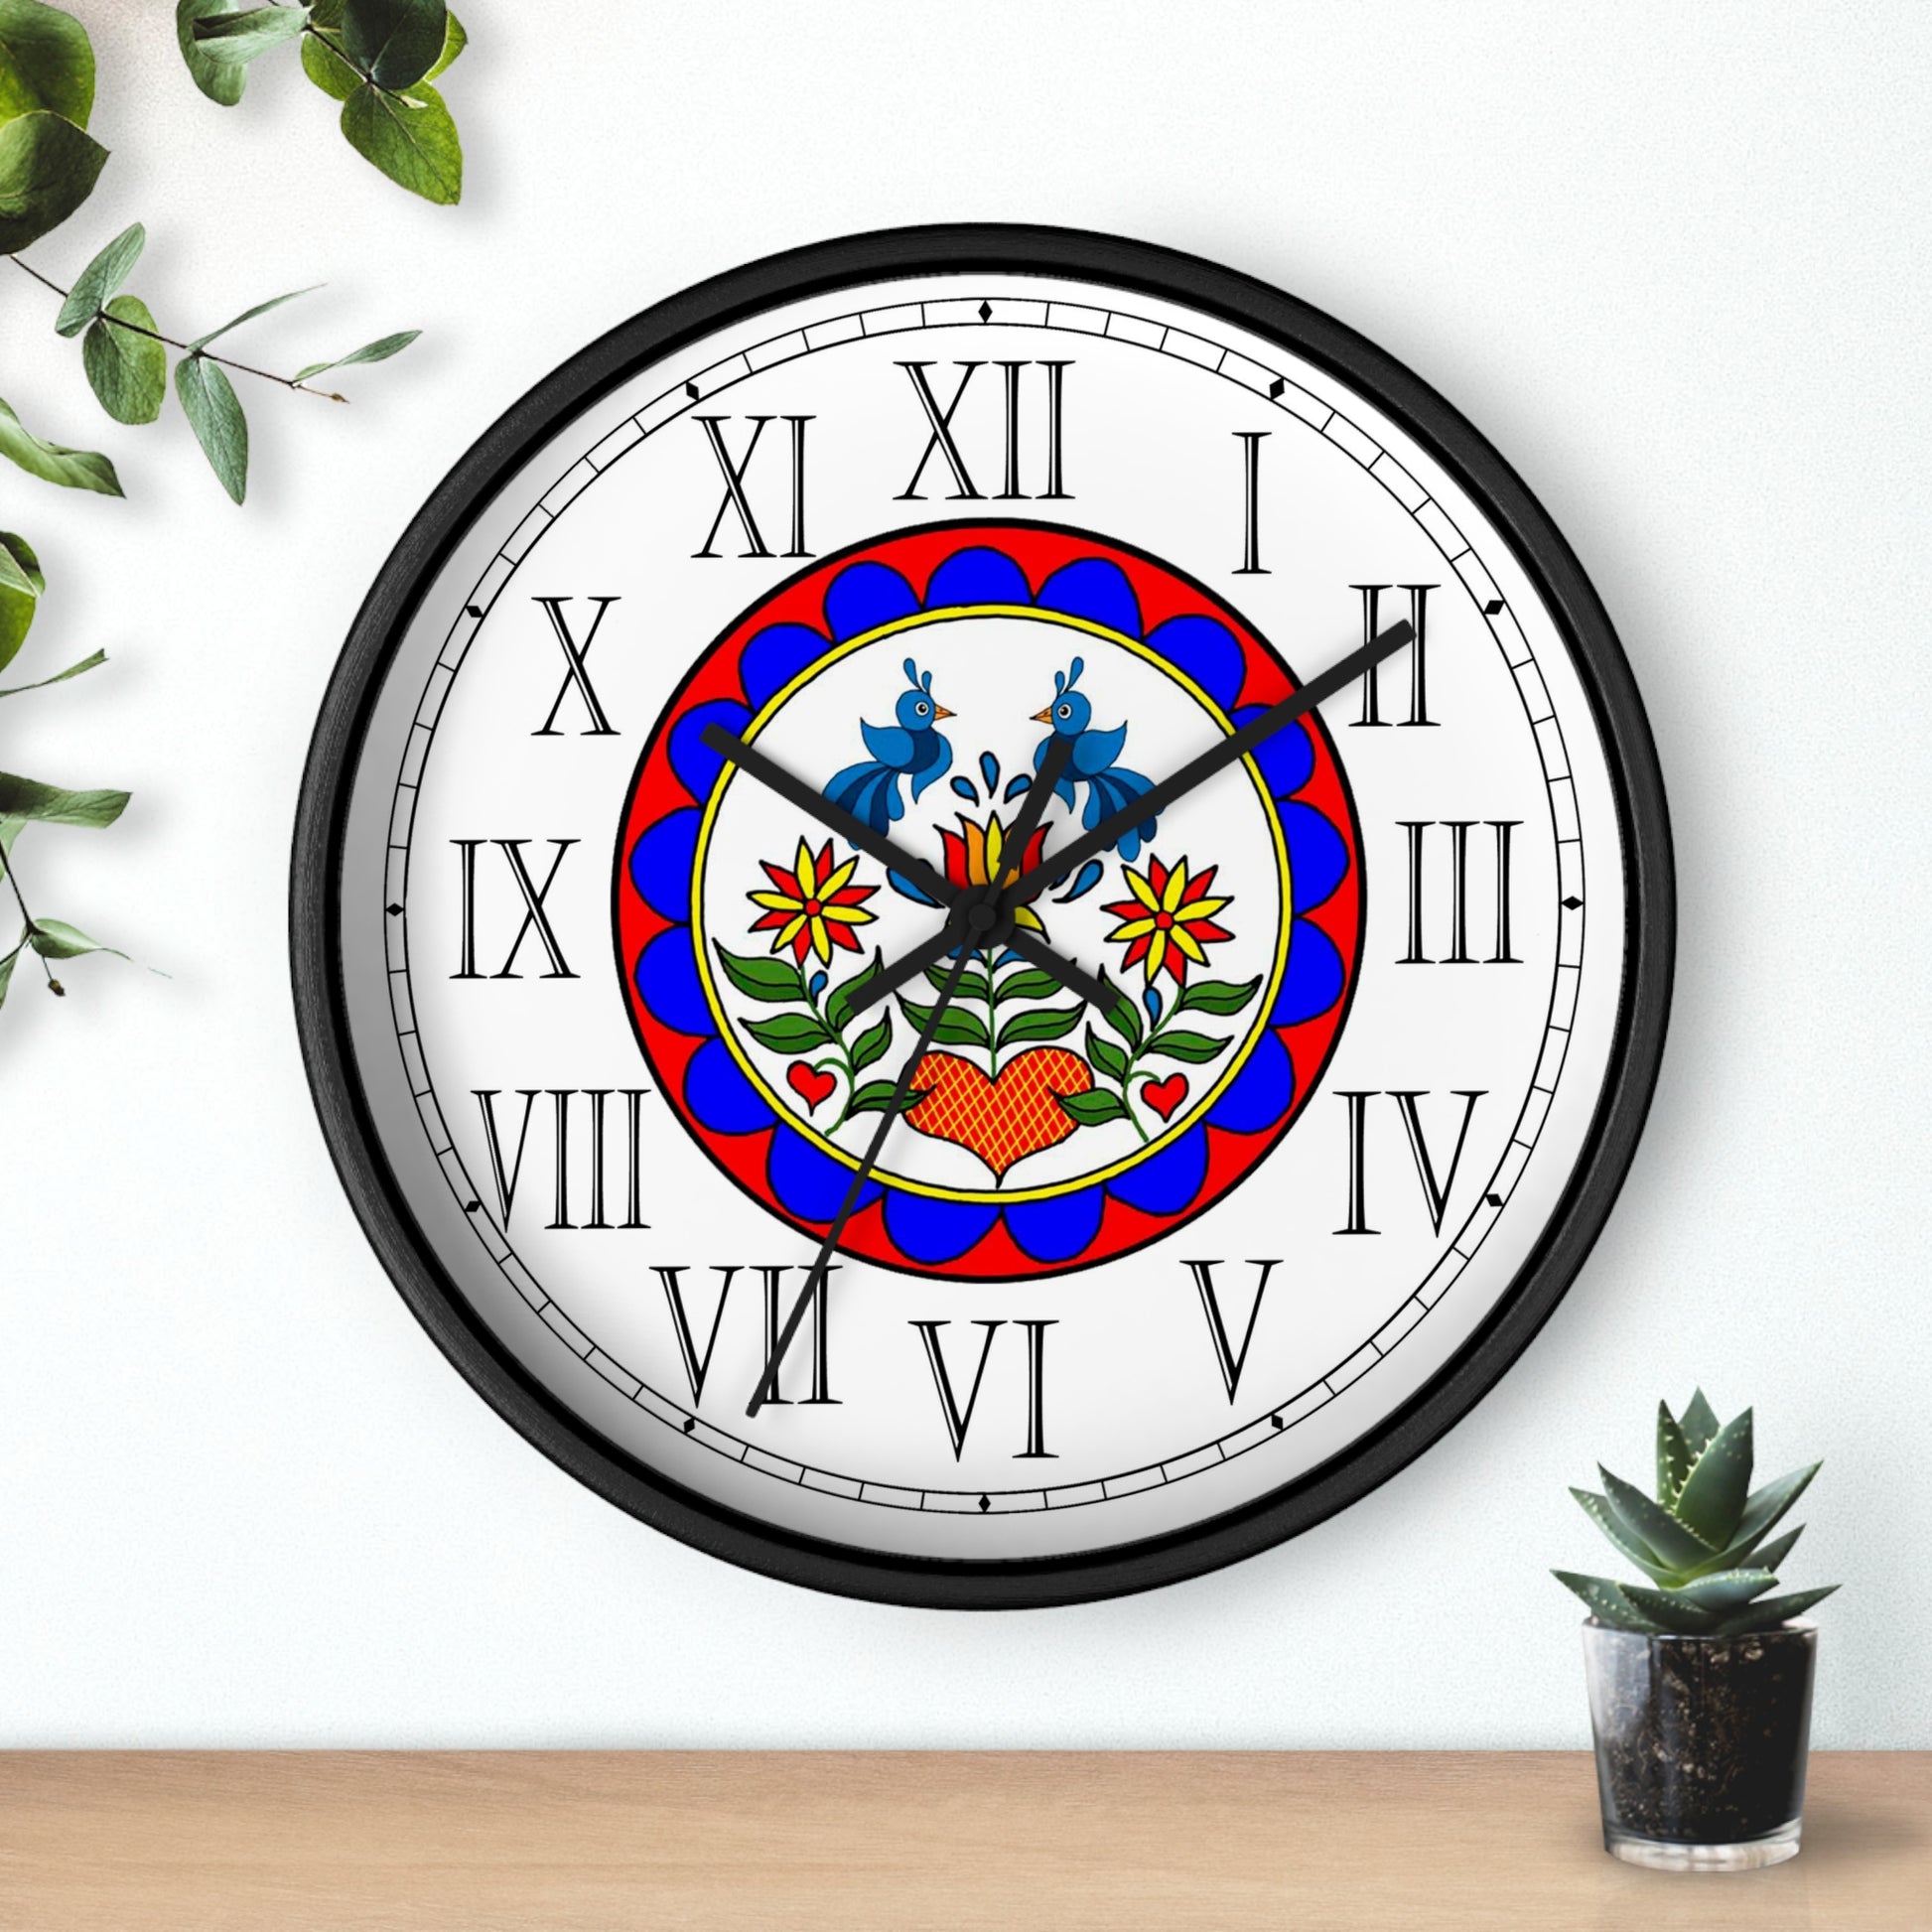 A delightful Pennsylvania Dutch design adds folk art charm to this decorative English Numeral Clock. Shop today!